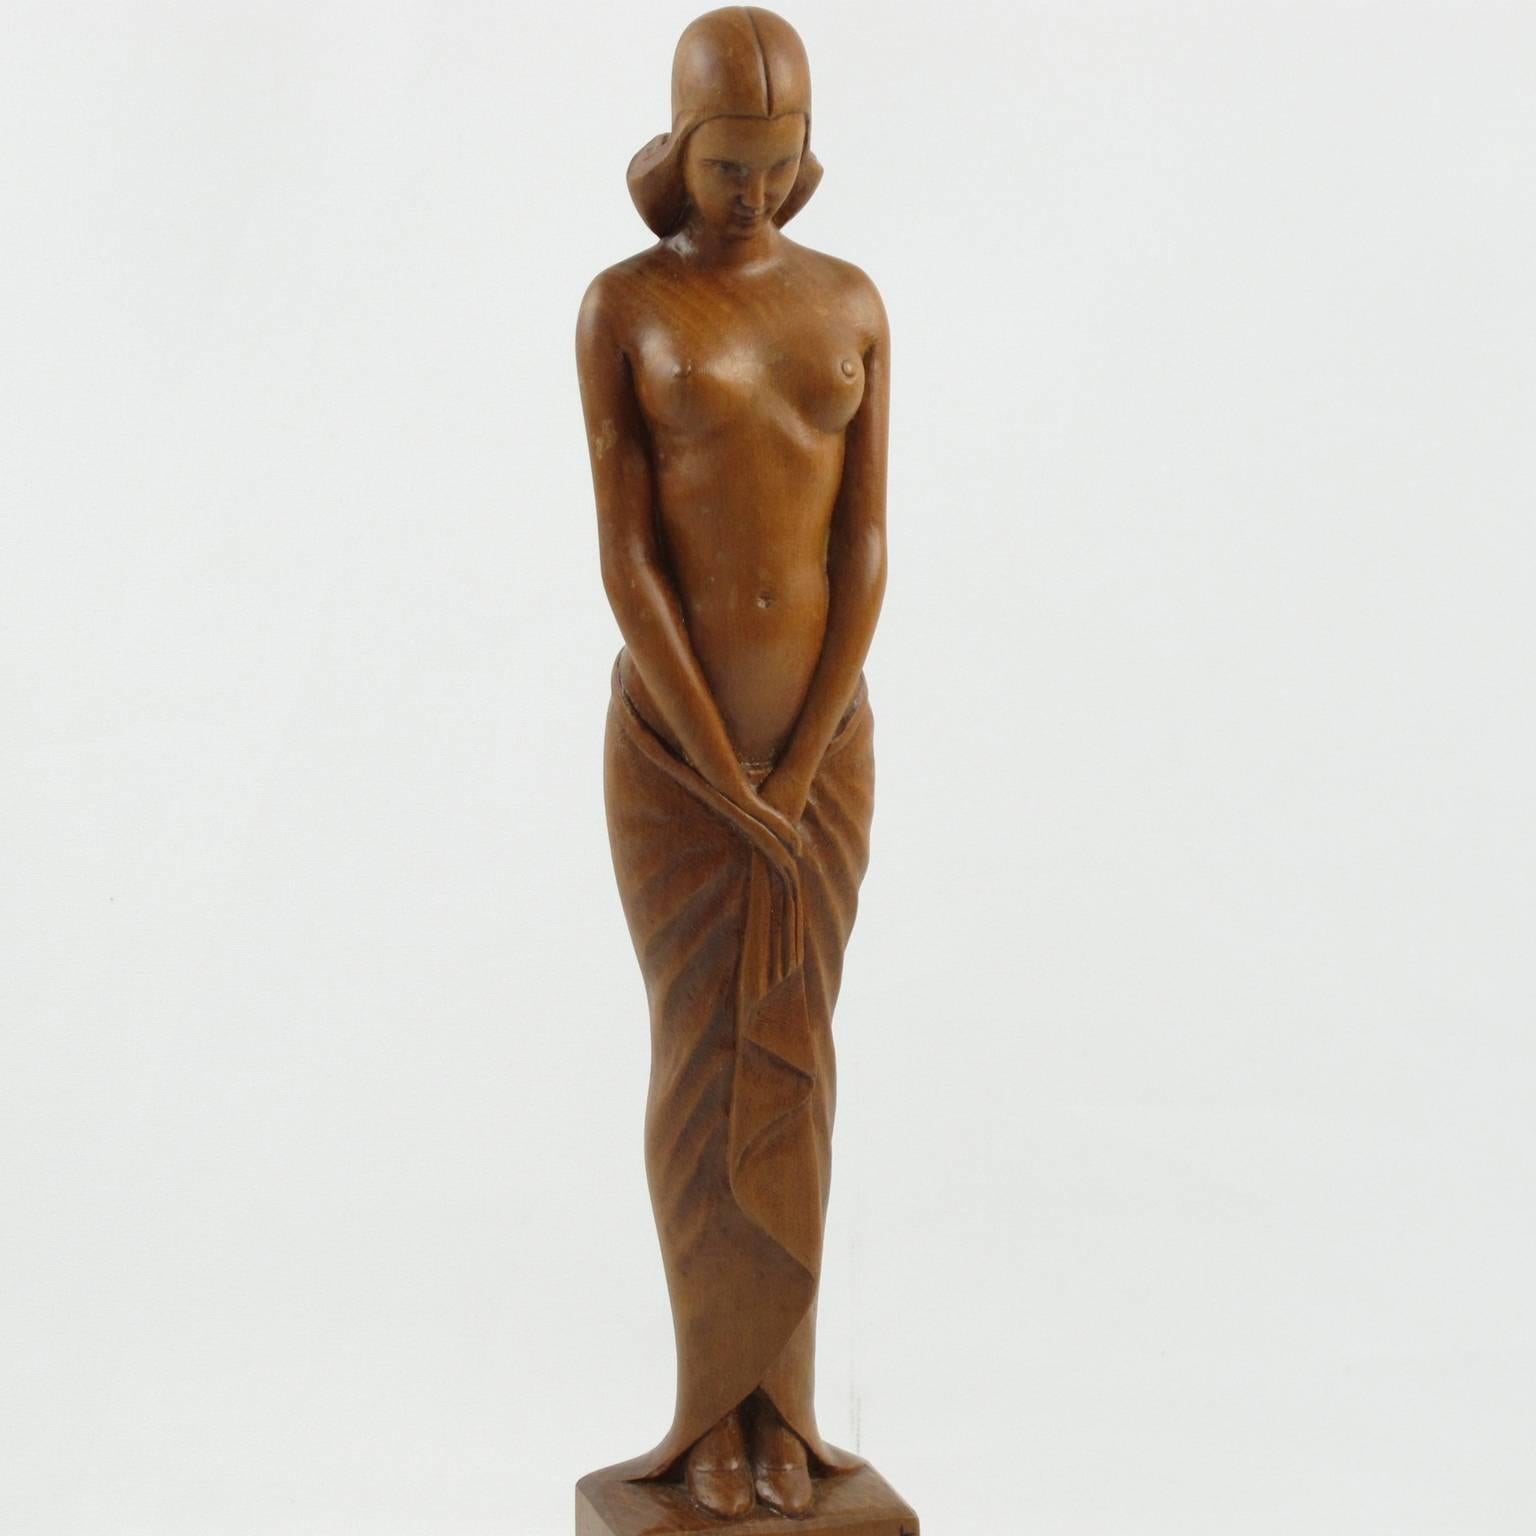 Beech Vintage French Art Deco Wooden Sculpture Statuette by L. Goussot, circa 1930s